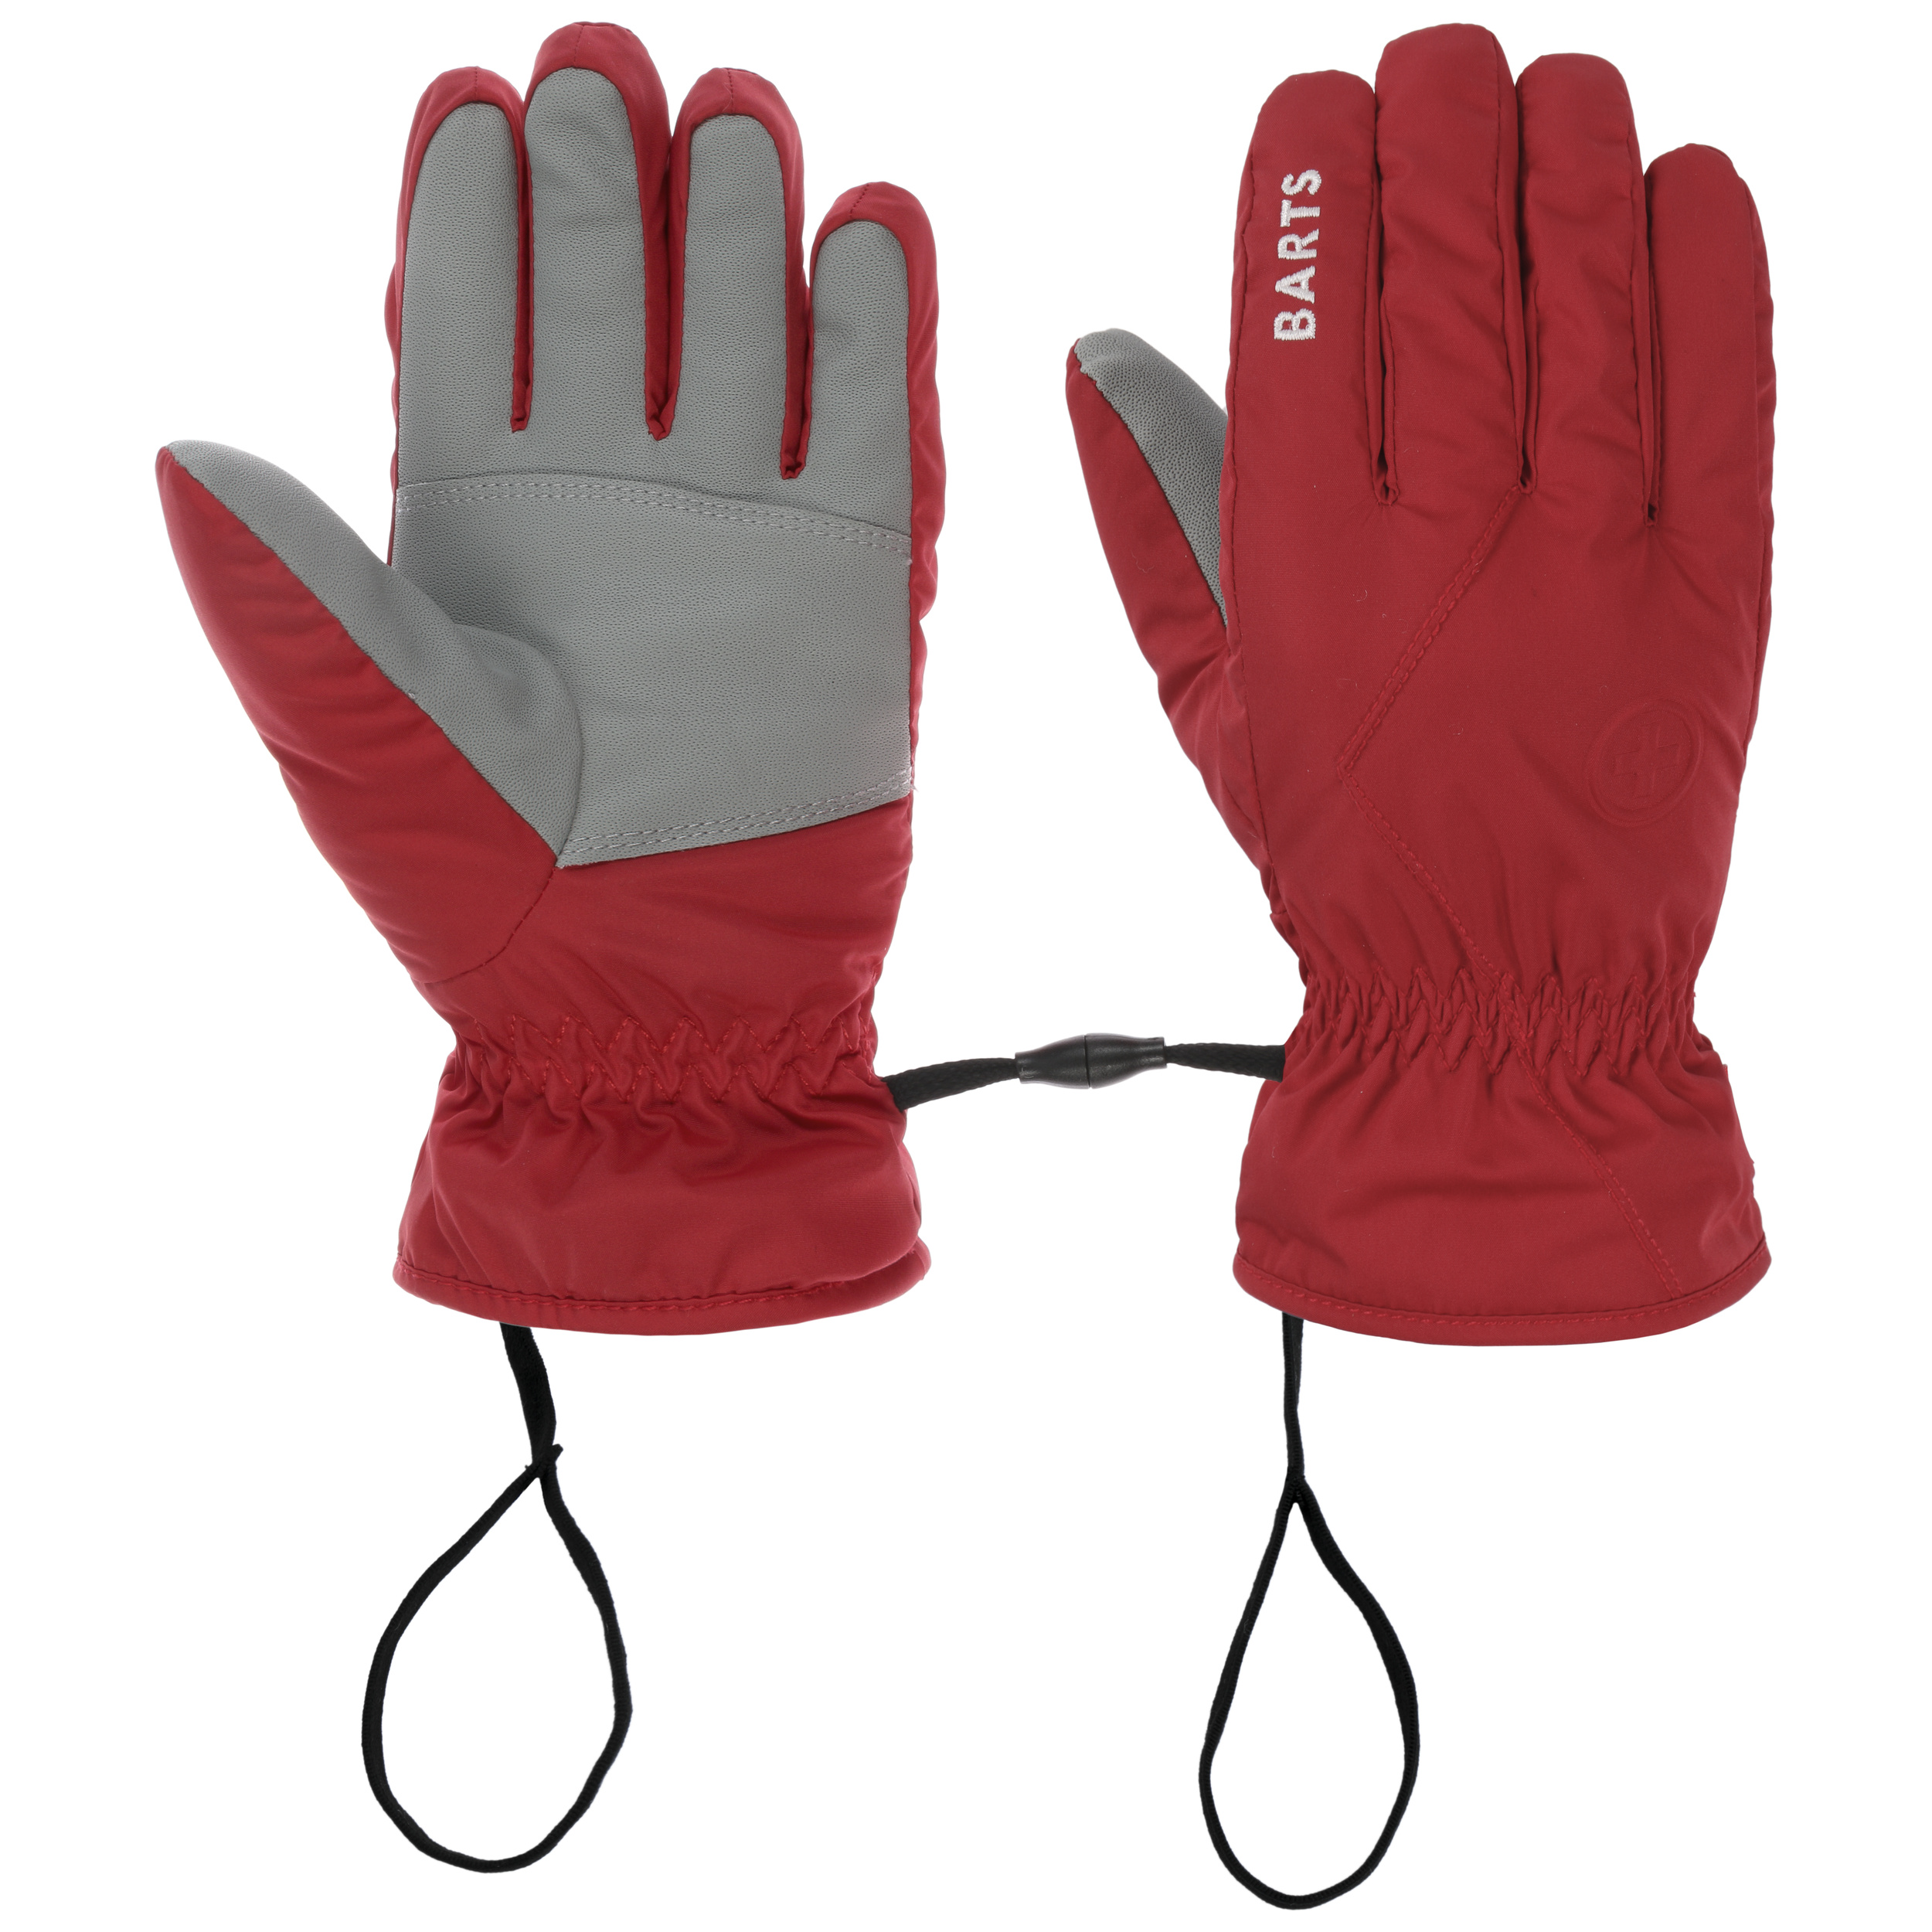 blue ski gloves